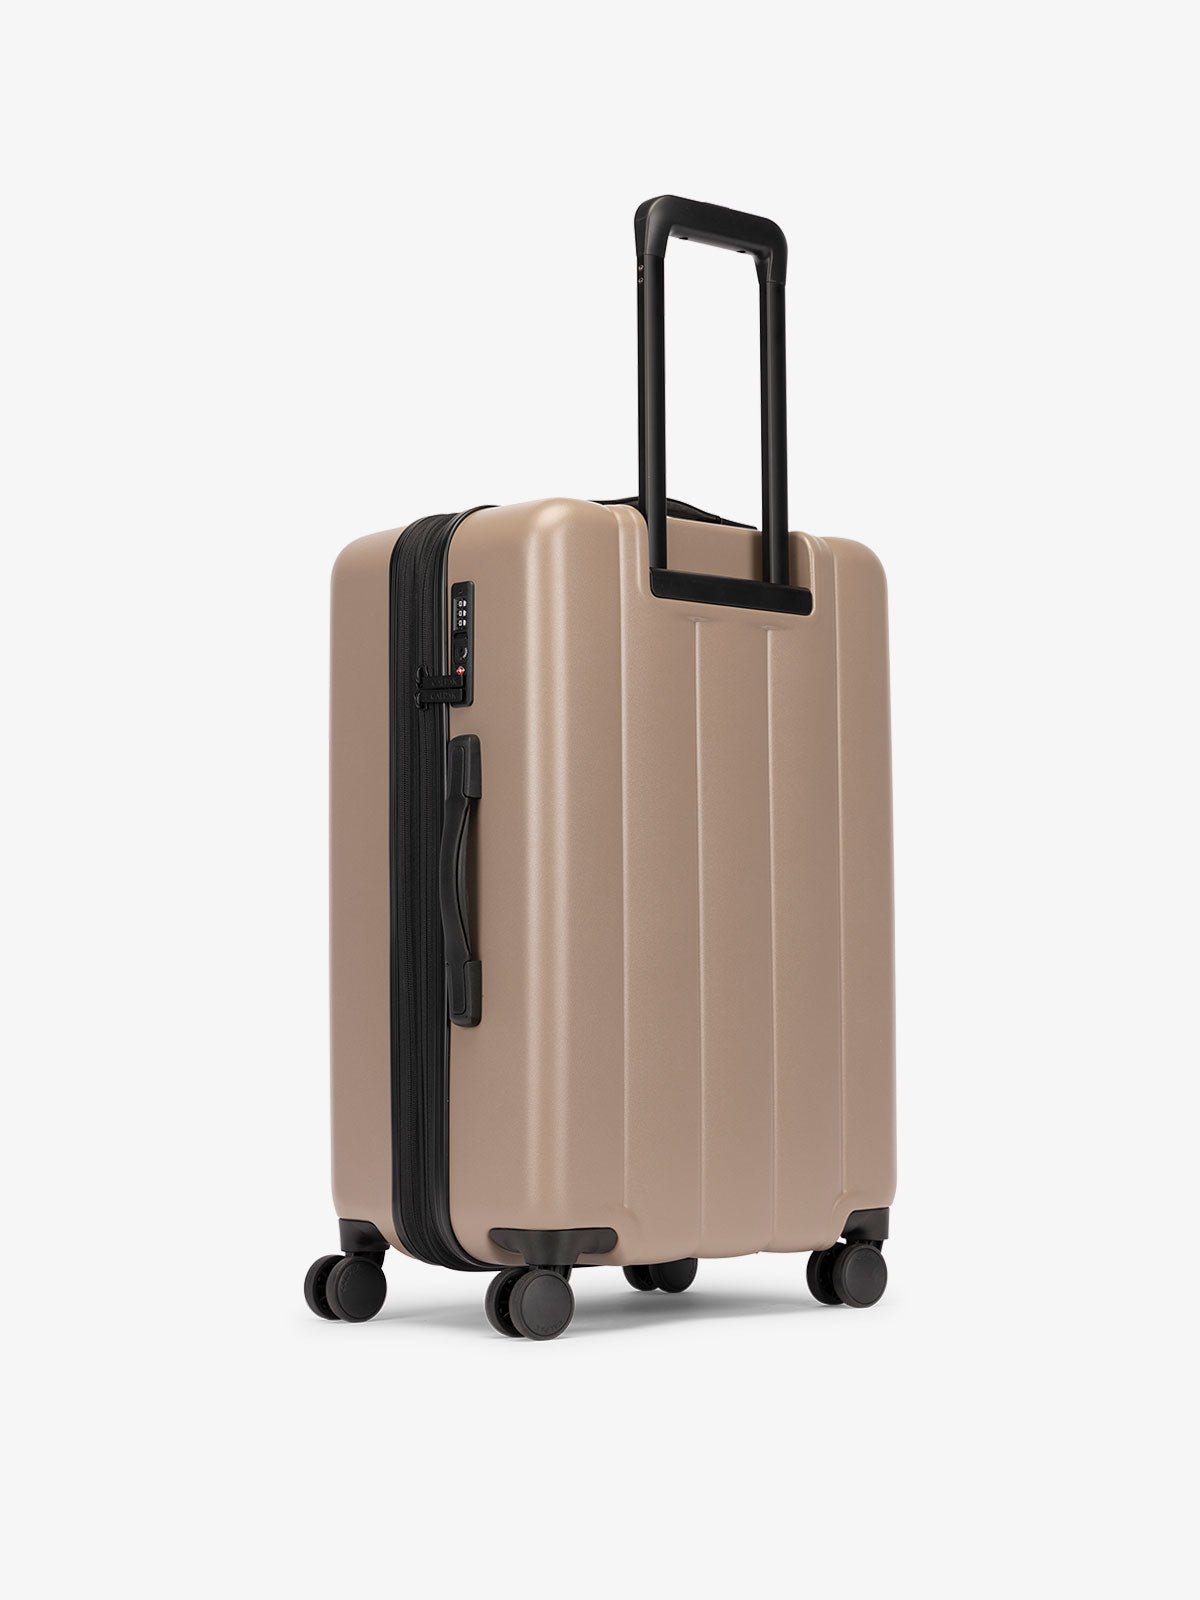 CALPAK medium luggage featuring dual spinner wheels and bottom grab handle in brown chocolate